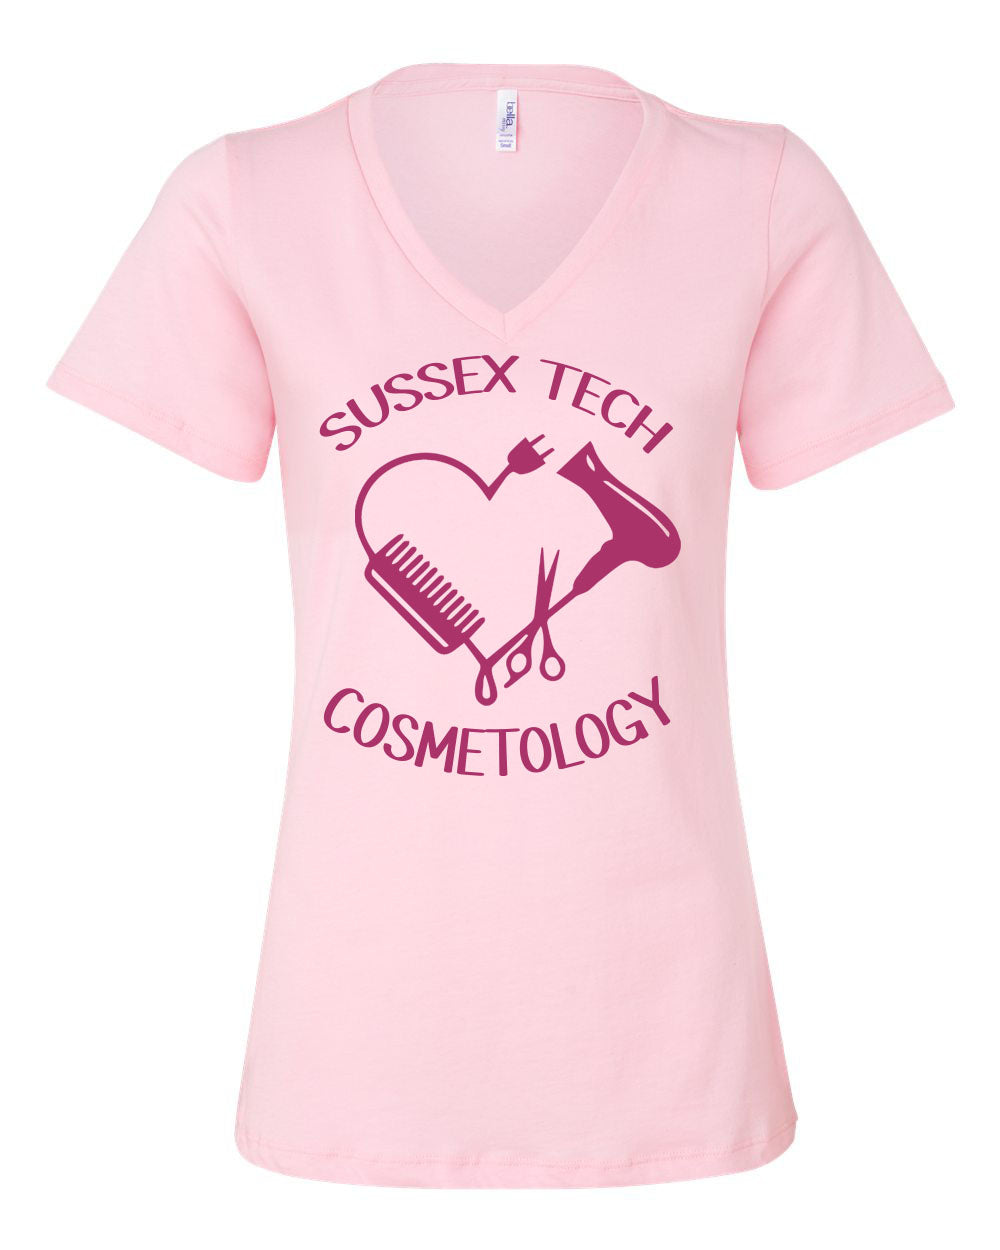 Sussex Tech Cosmetology Design 2 V-Neck